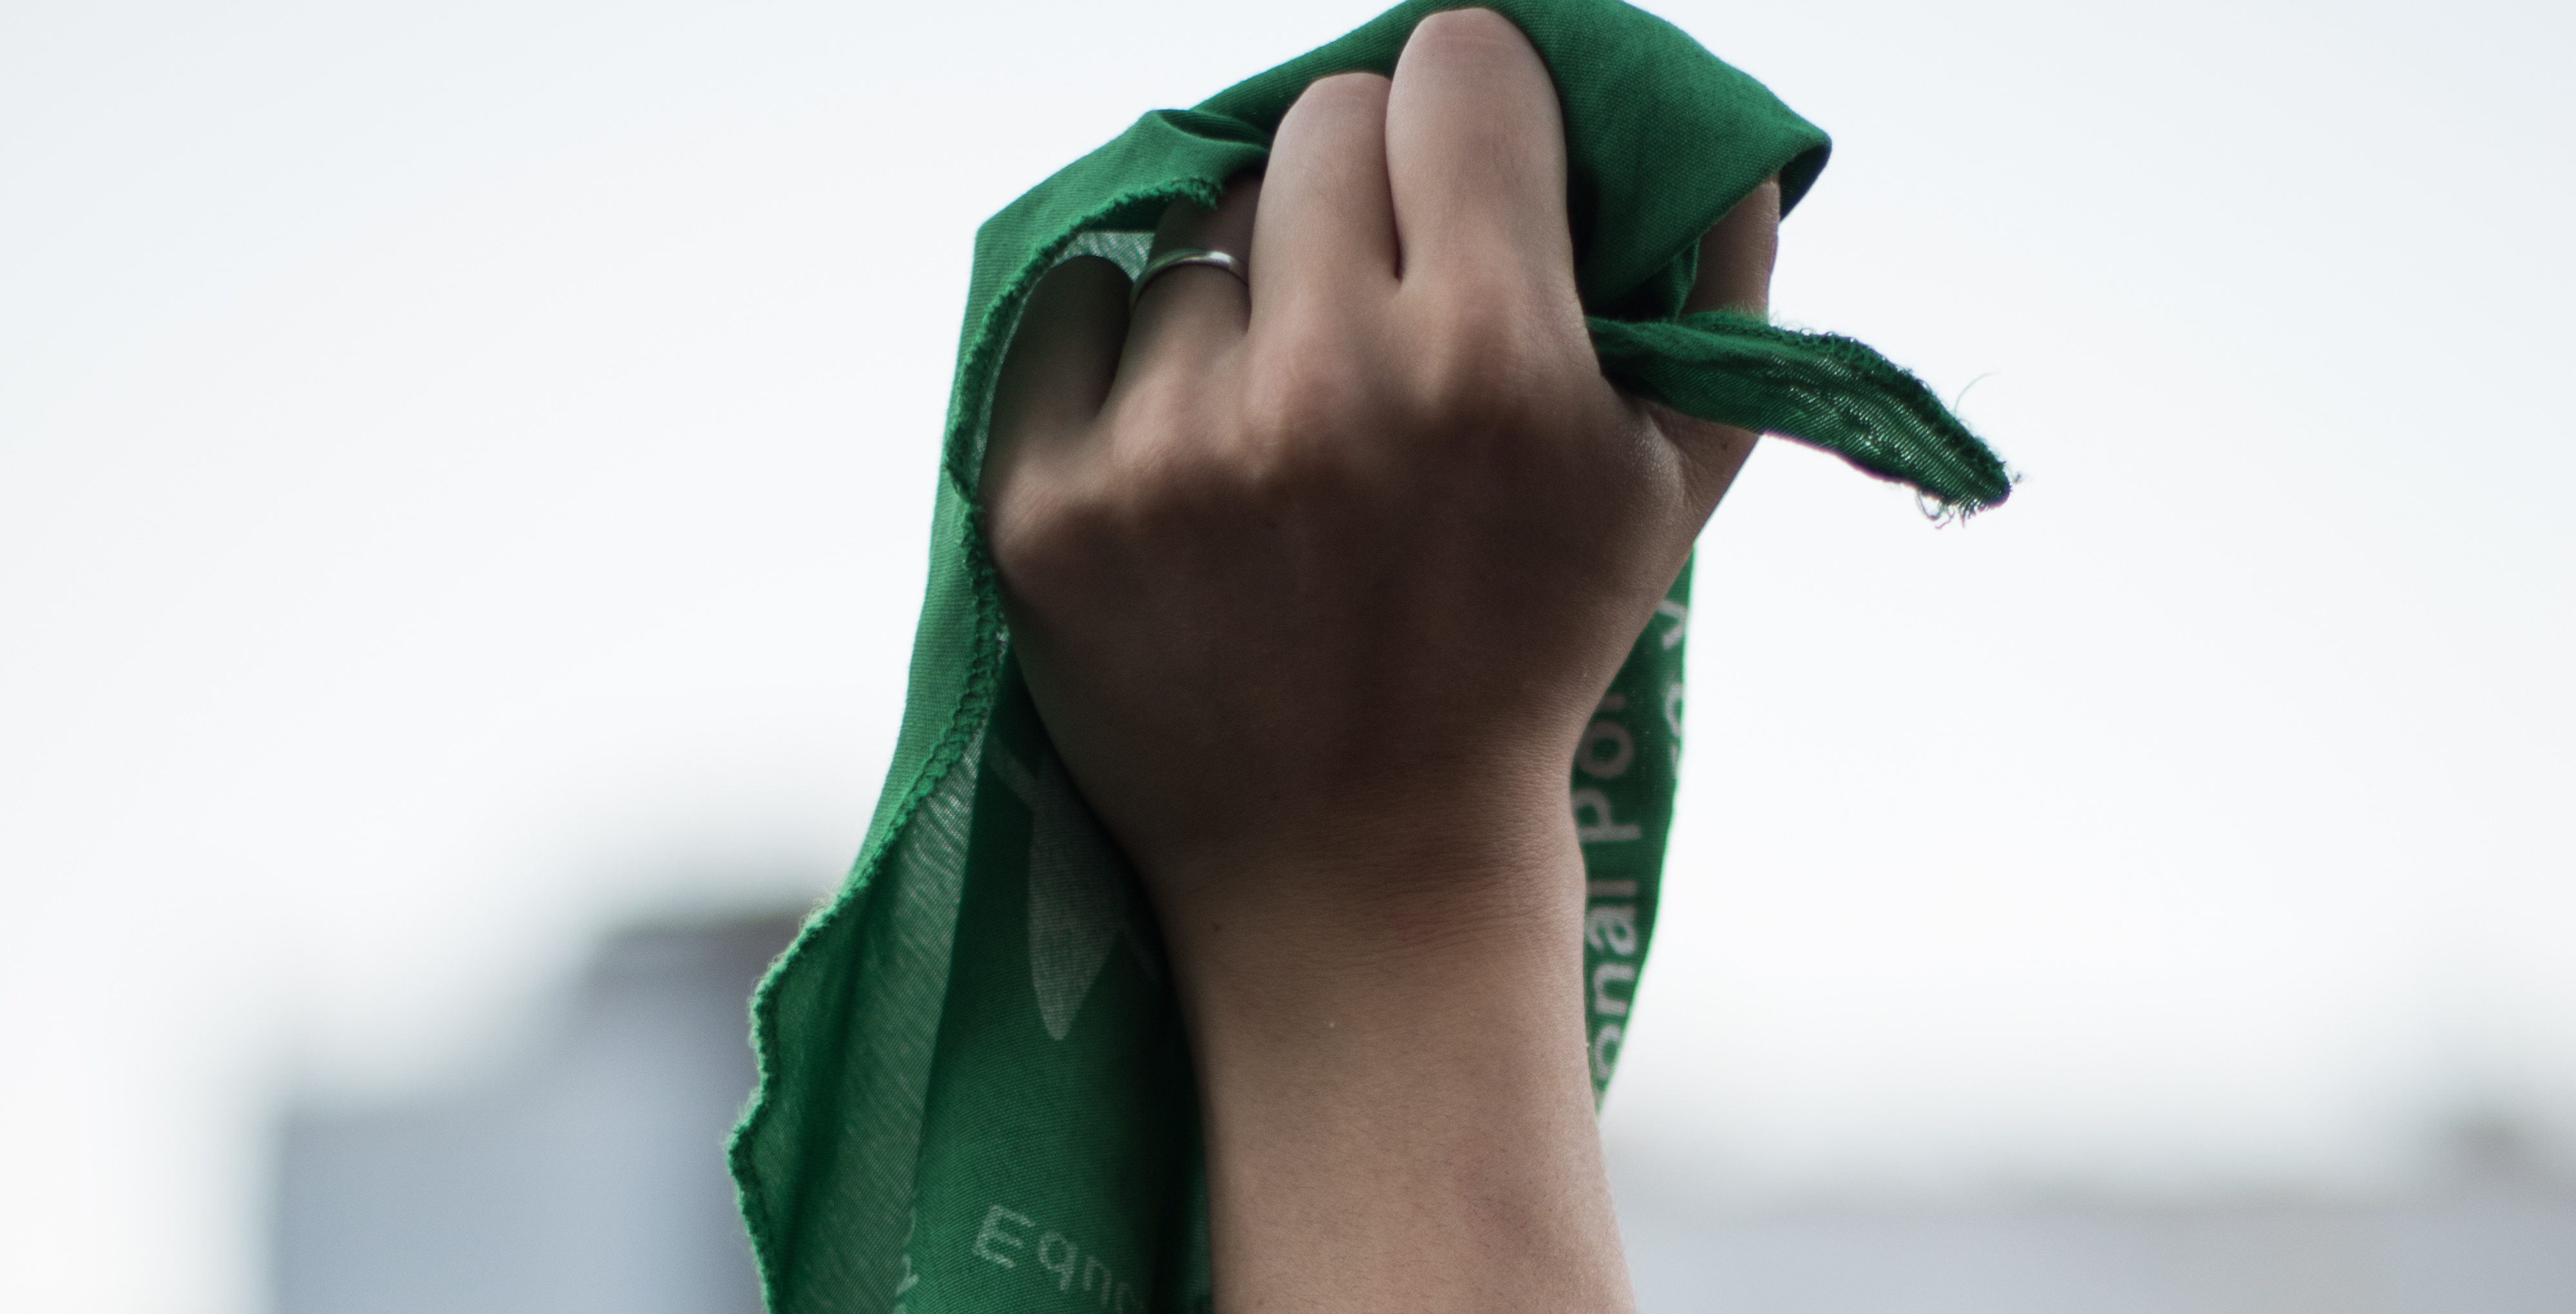 fist in air holding a green bandana